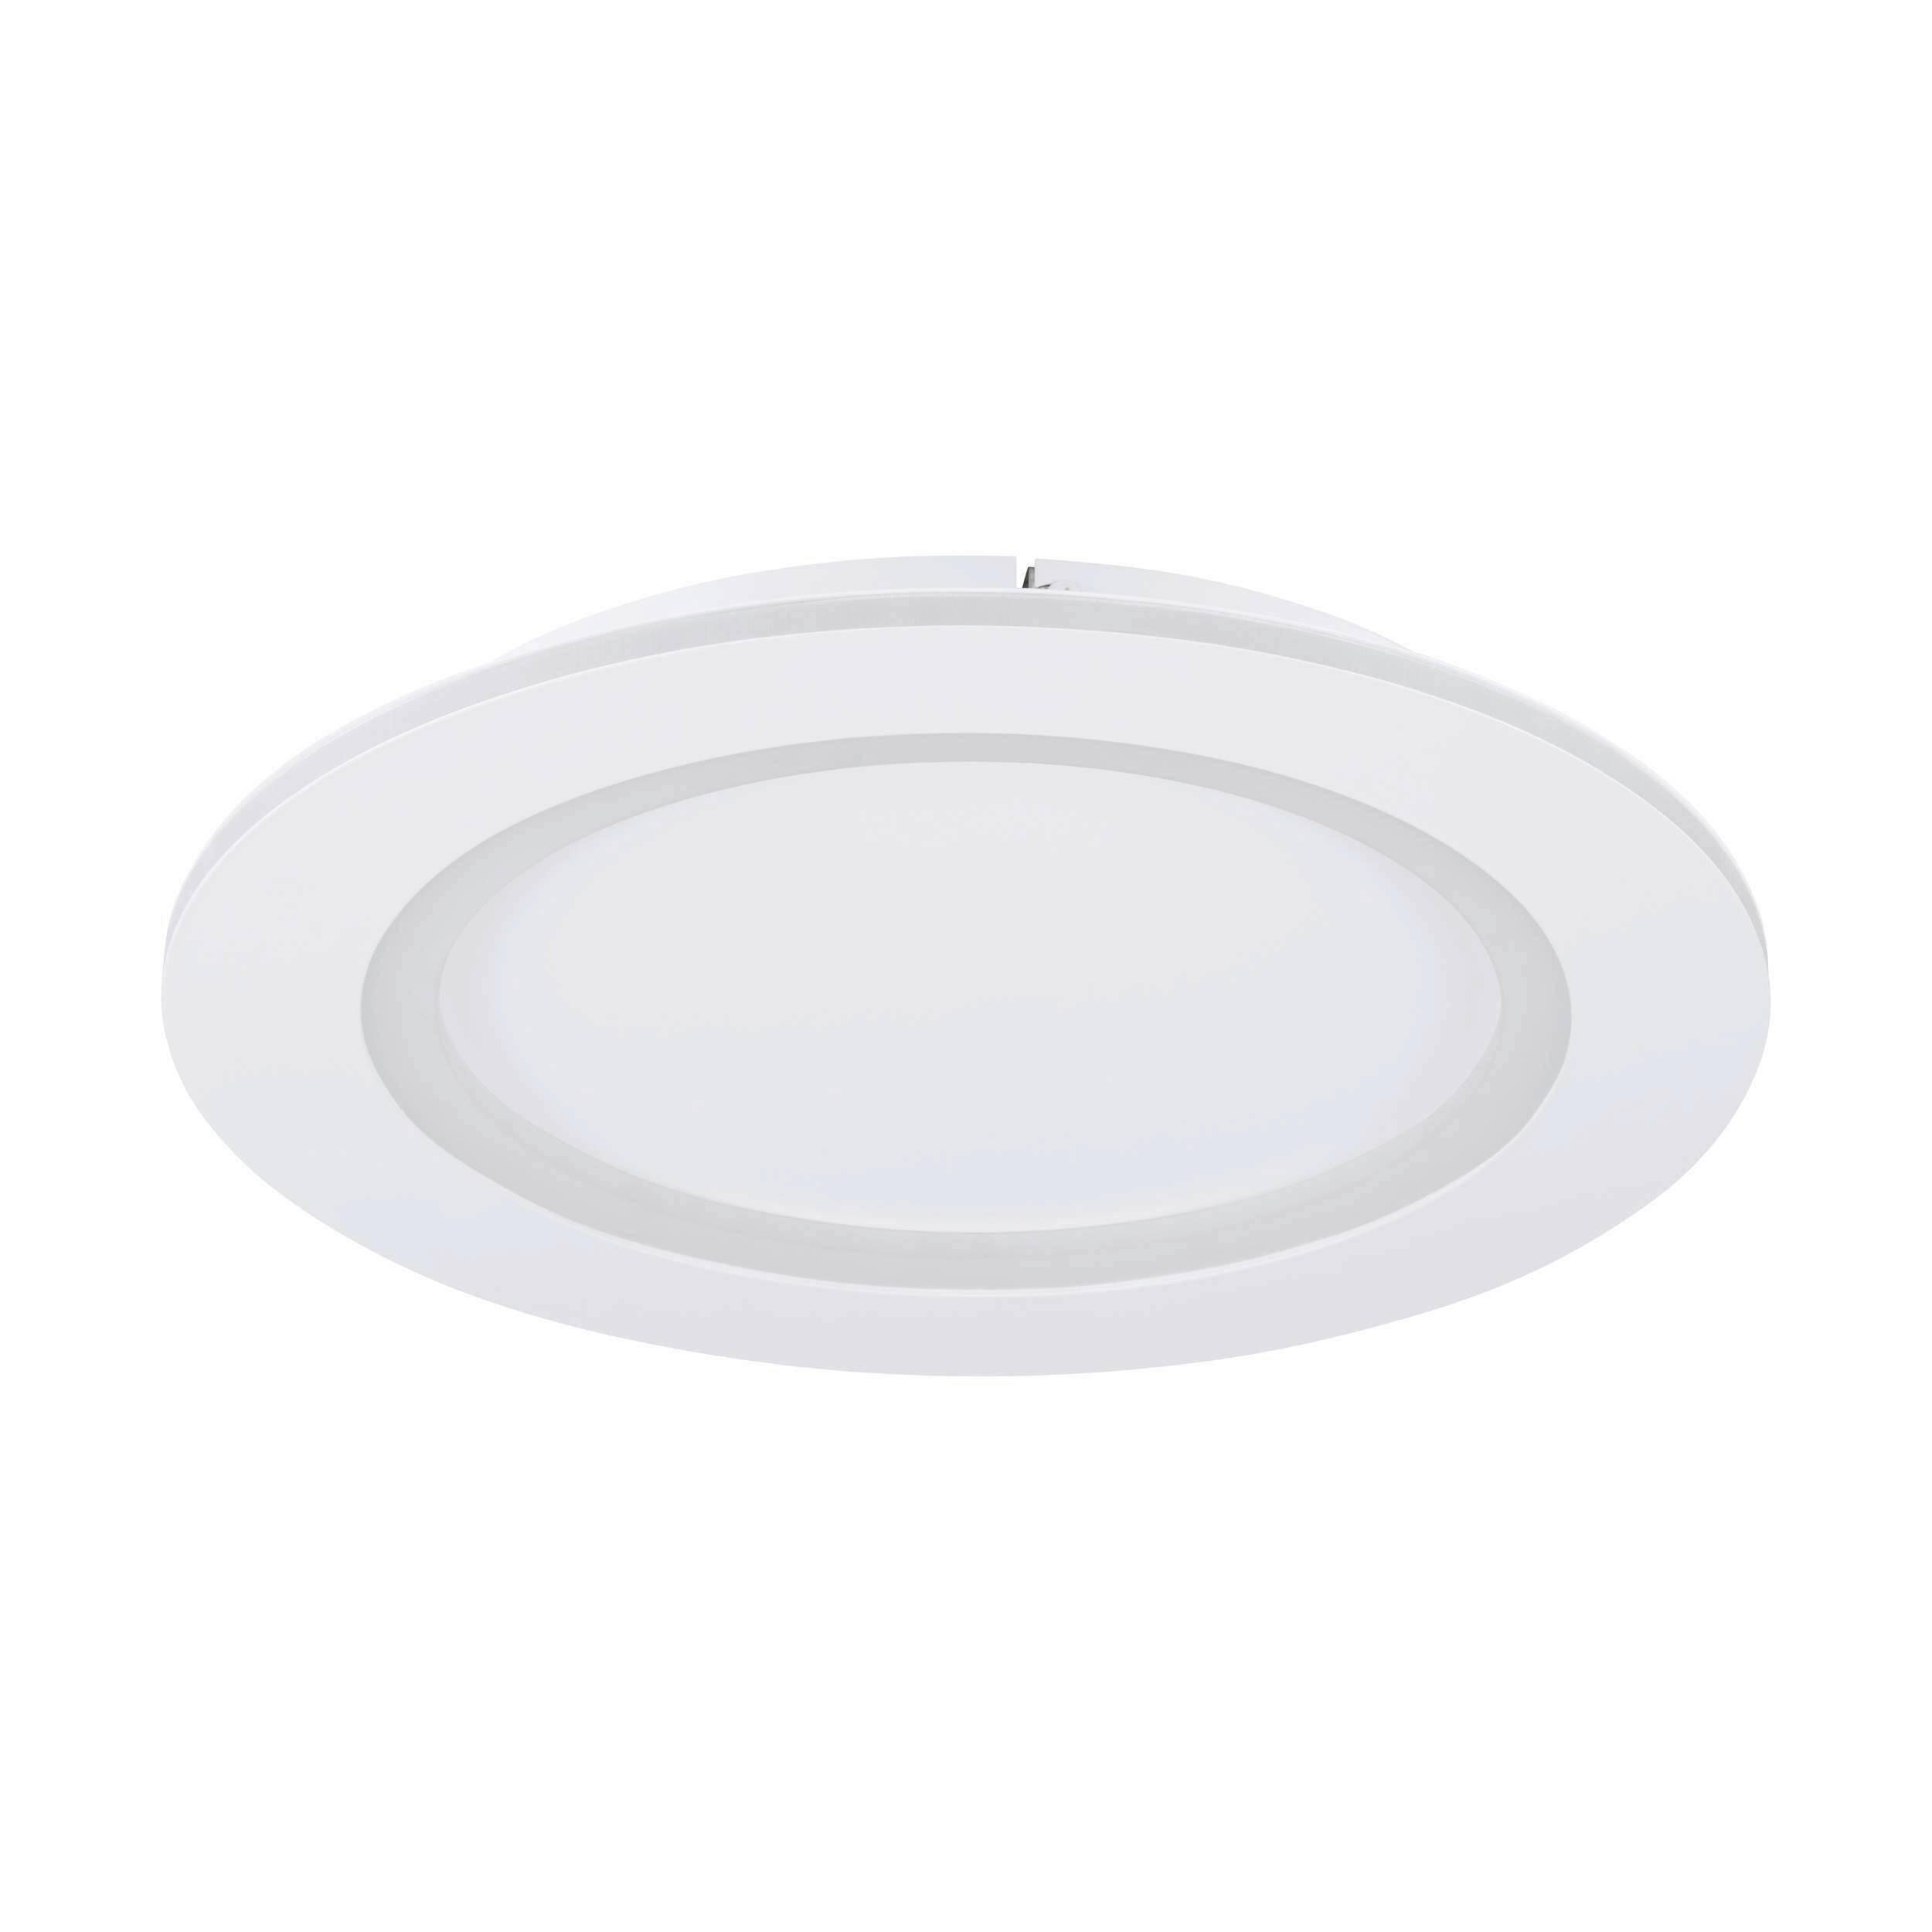 LED-DECKENLEUCHTE Padrogiano 45/10 cm   - Weiß, Basics, Kunststoff/Metall (45/10cm) - Eglo